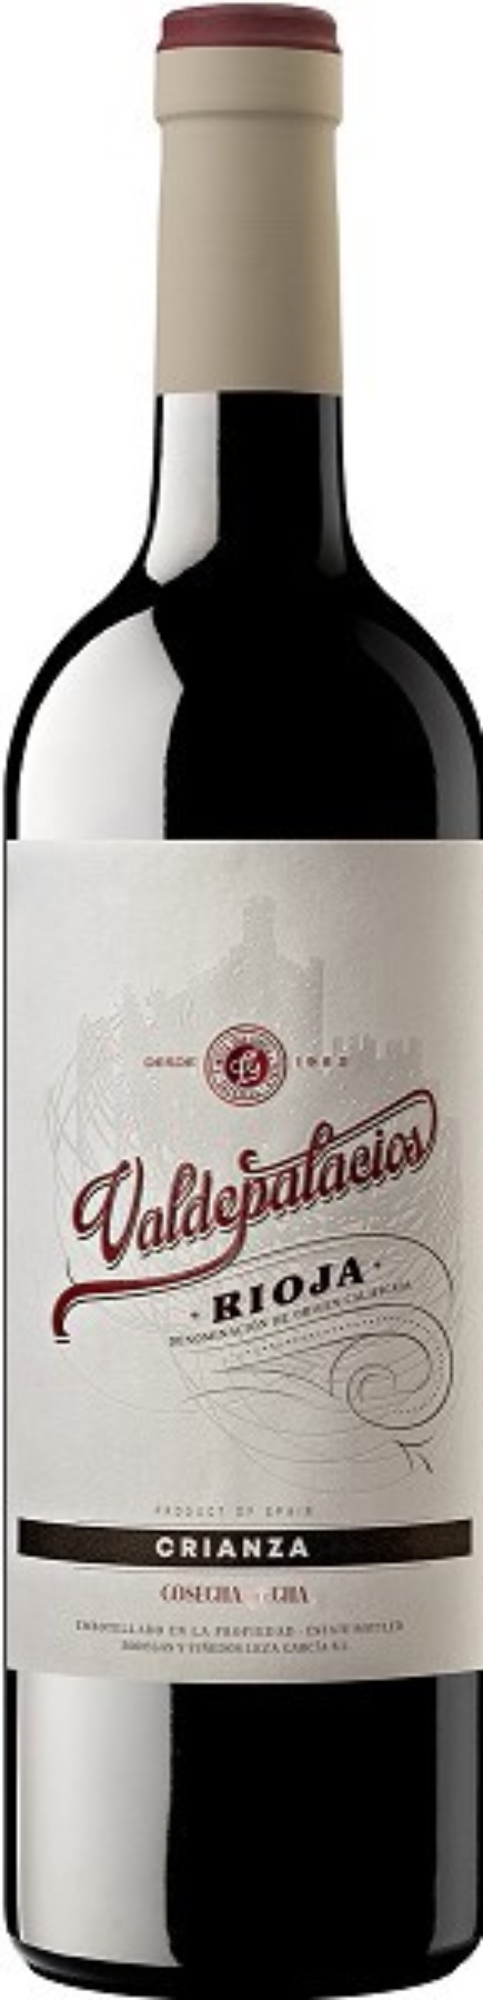 Valdepalacios Rioja Crianza 2019